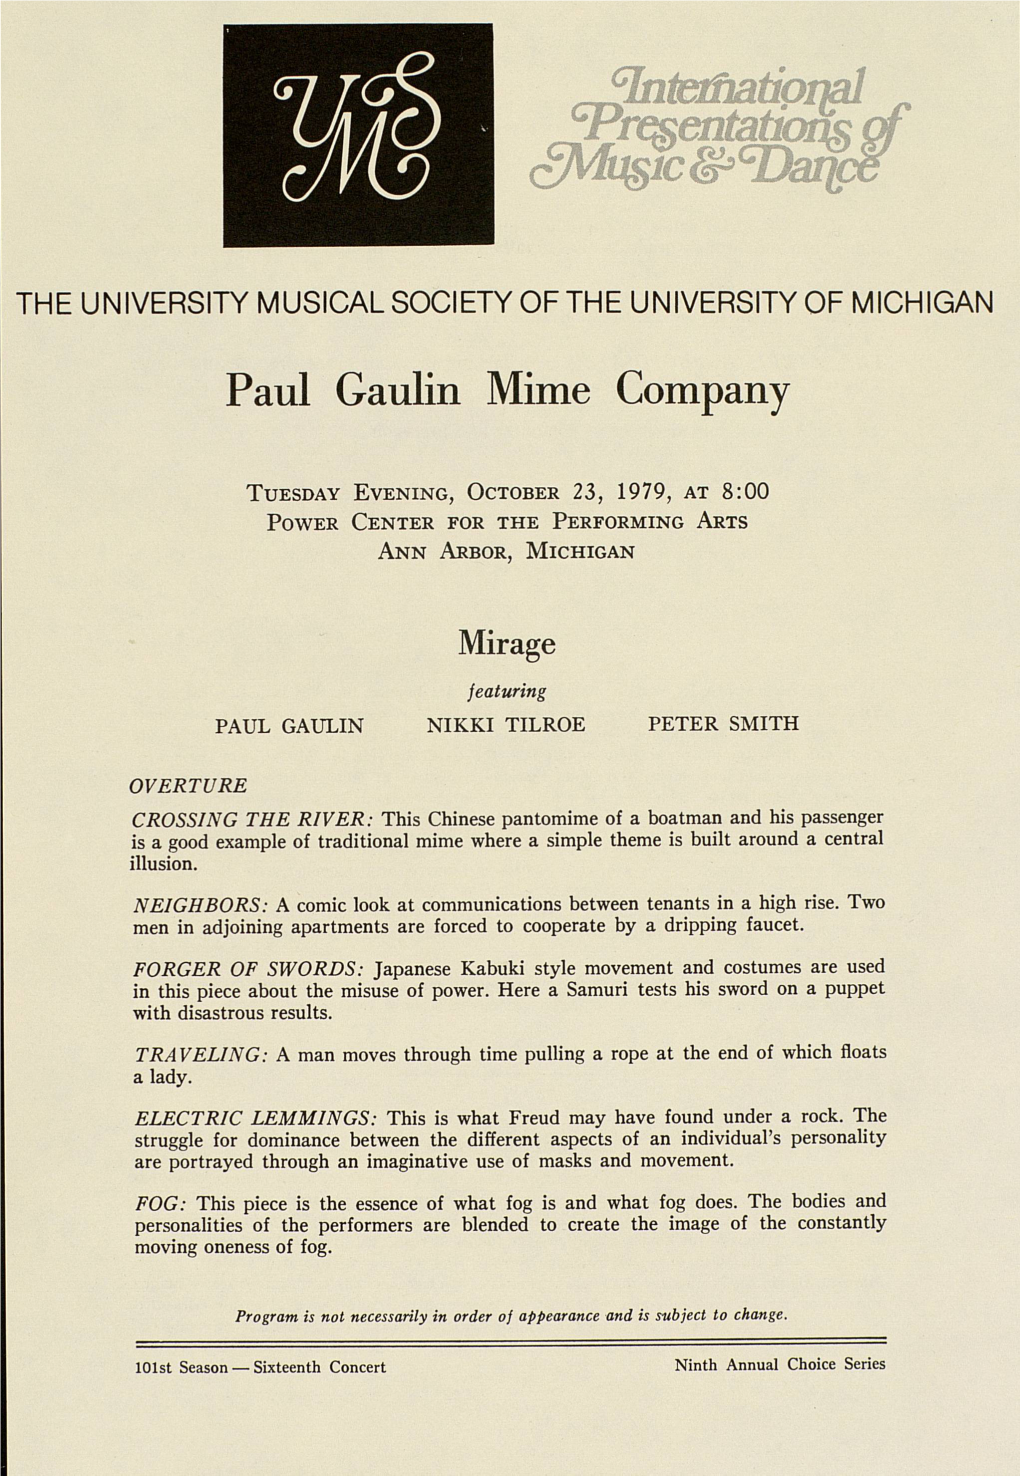 Paul Gaulin Mime Company